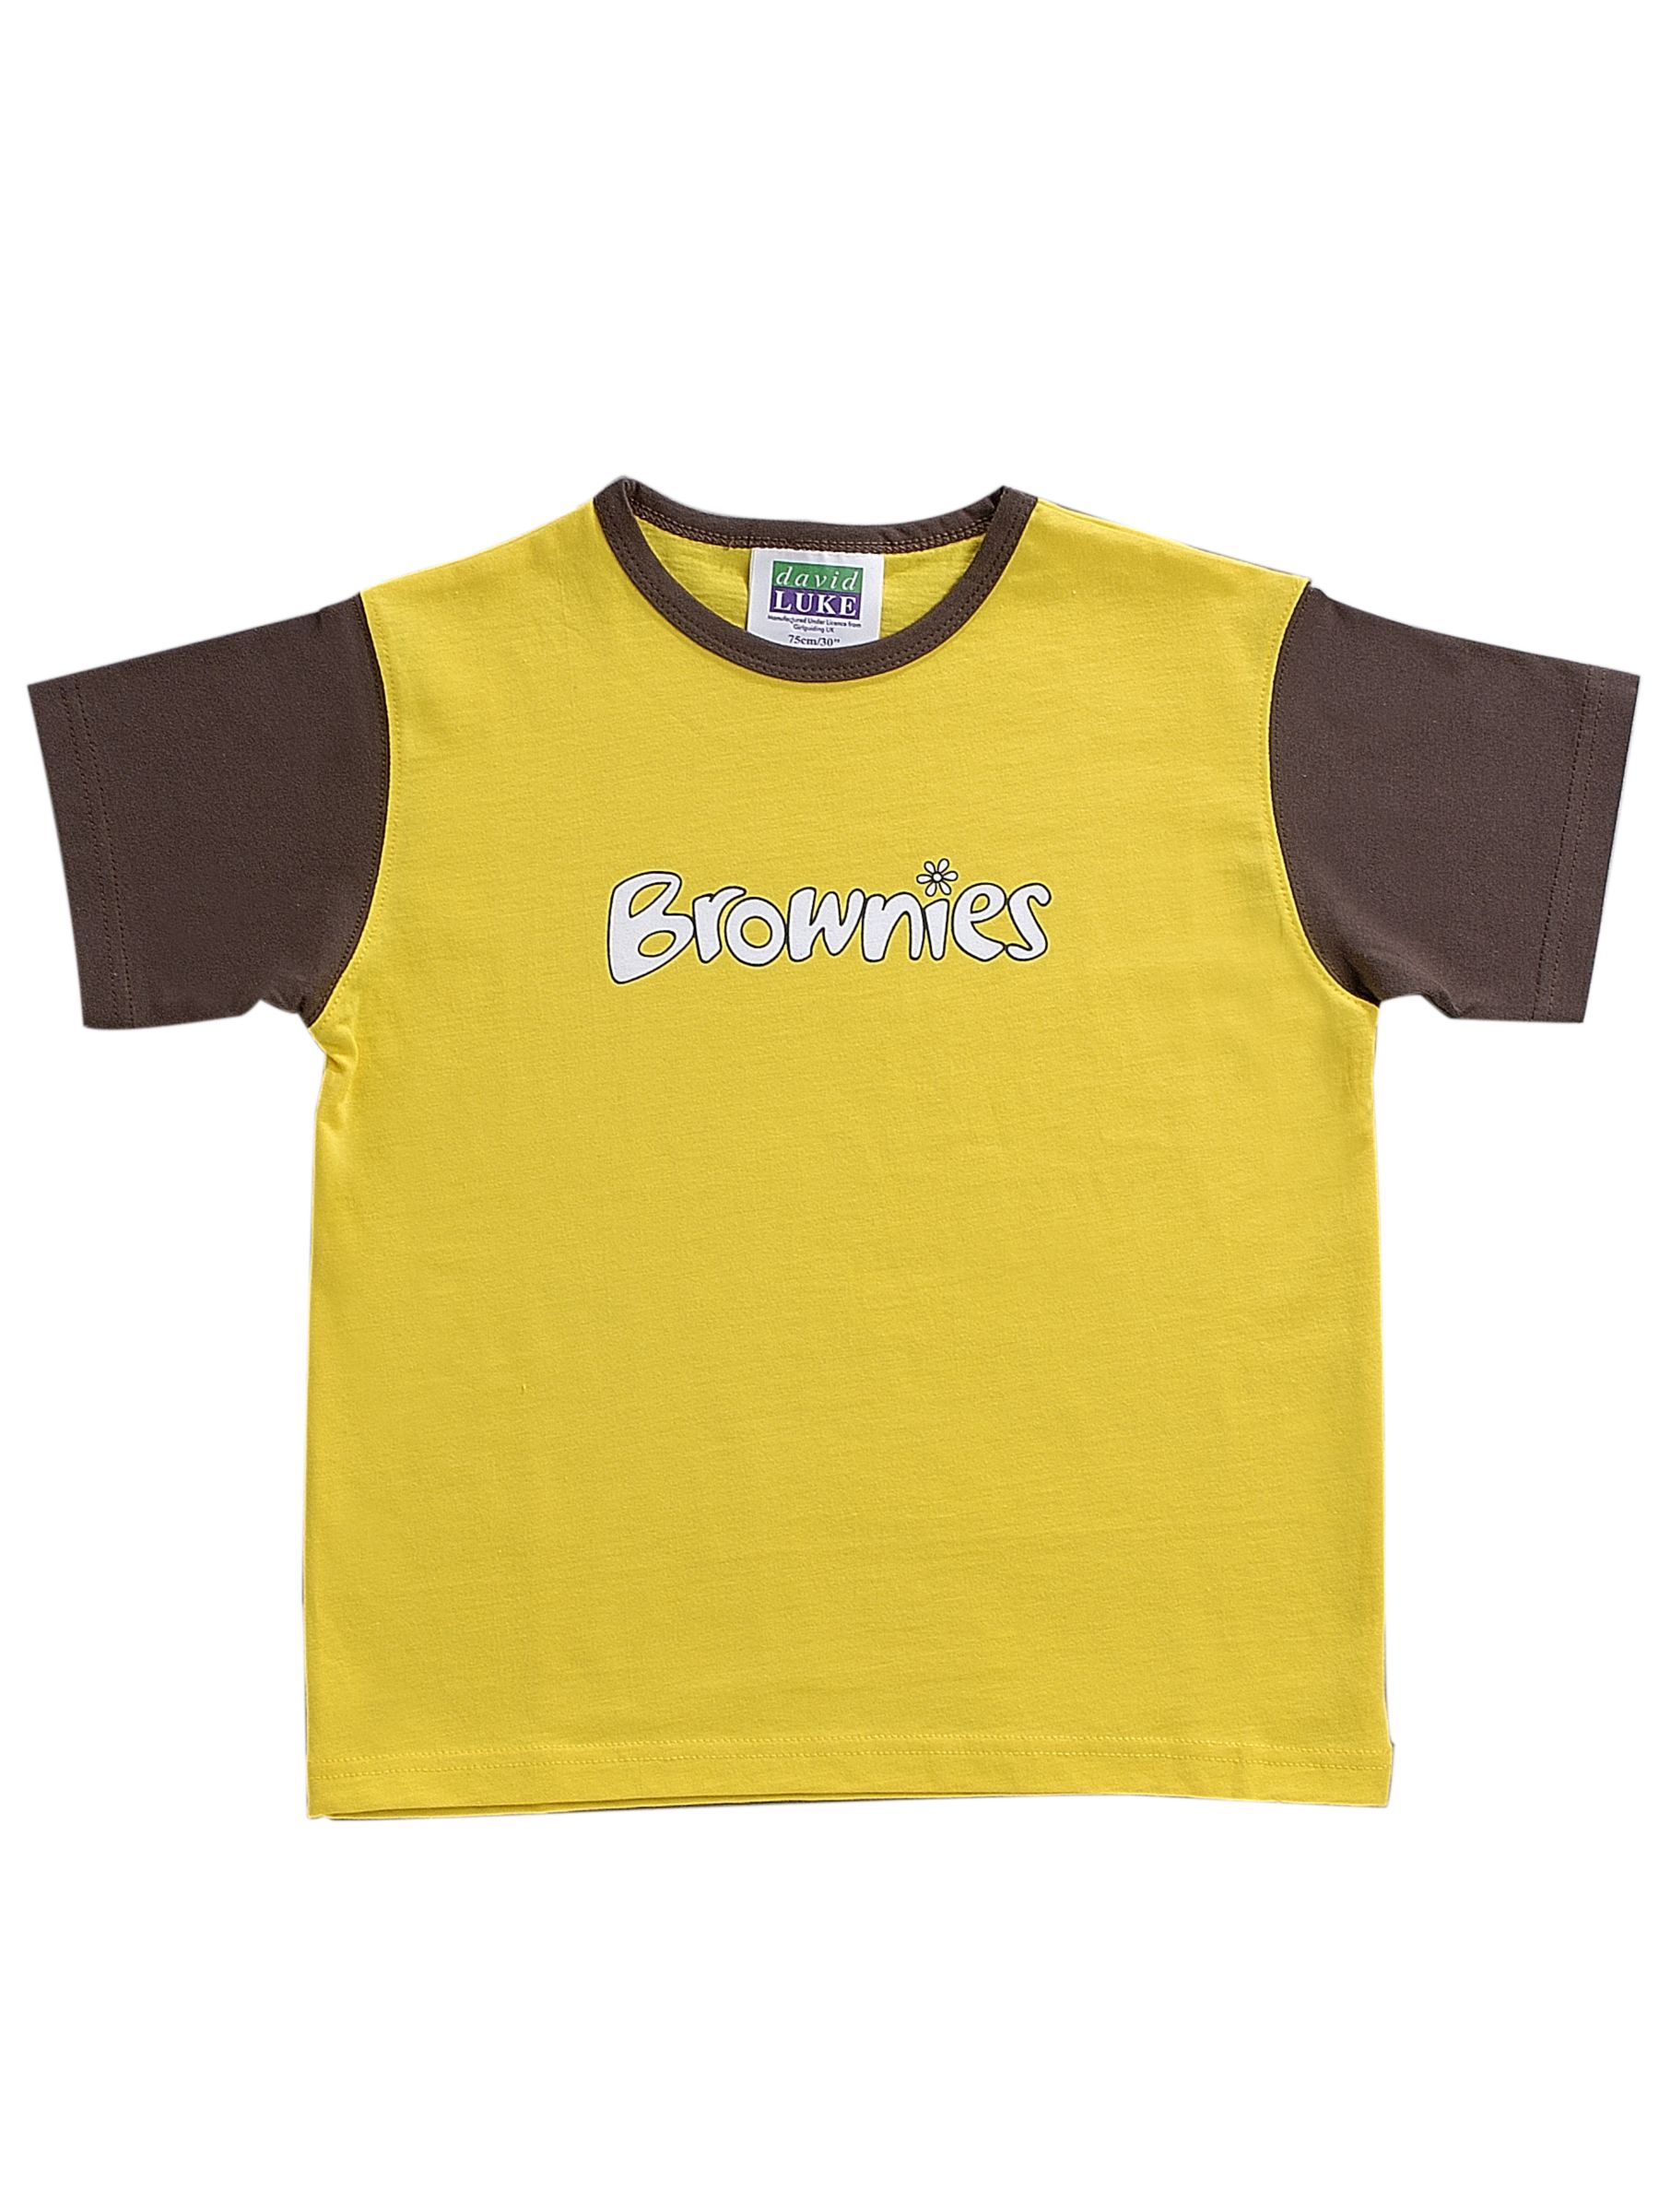 Short Sleeve T-shirt, Yellow/Brown 40323